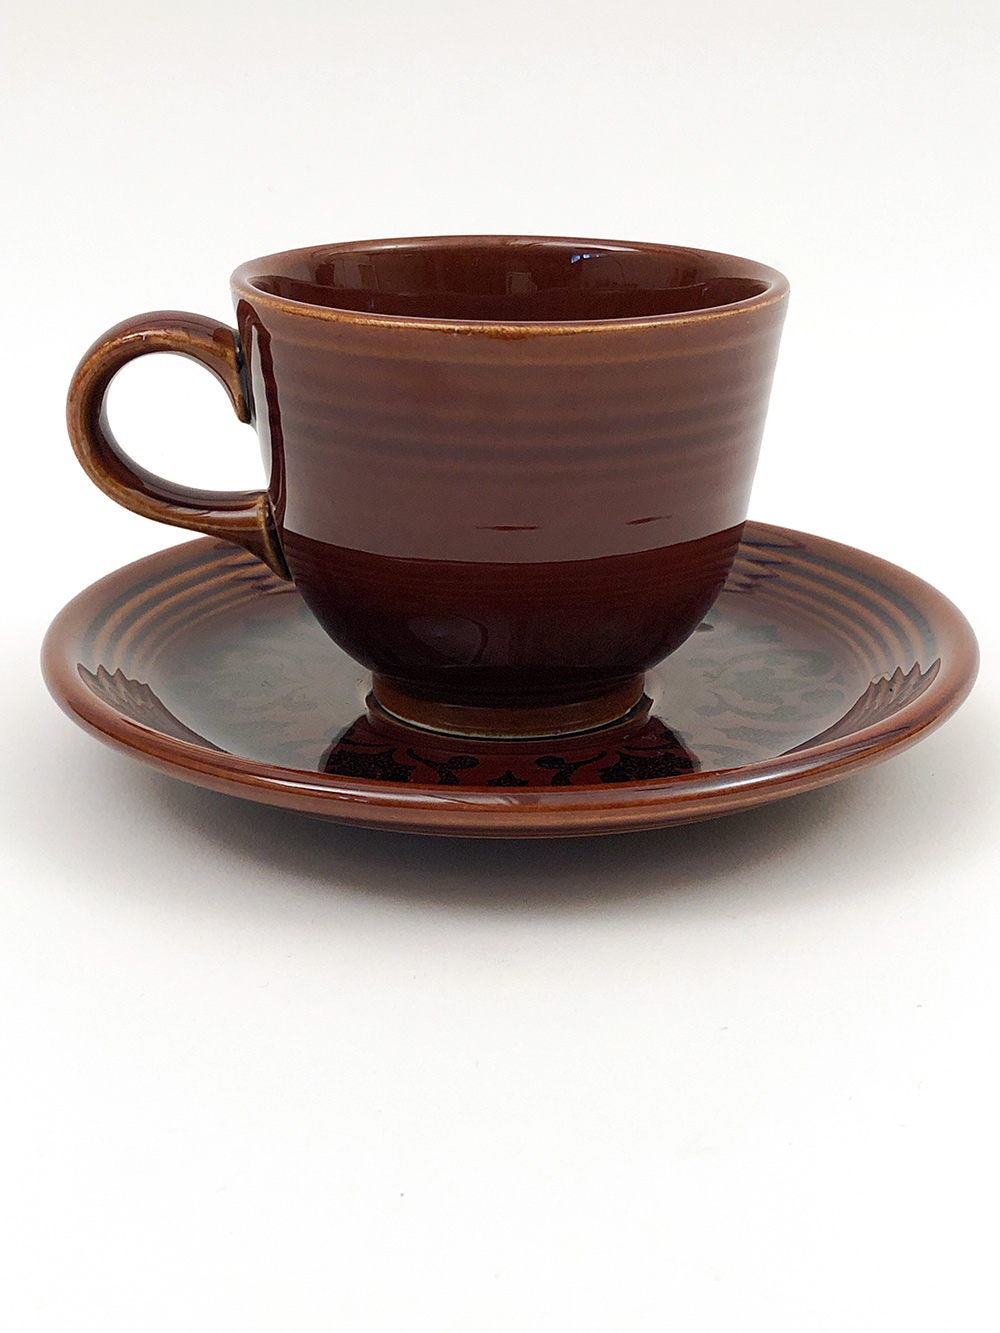 fiesta ironstone teacup and saucer set in sheffield amberstone dark brown